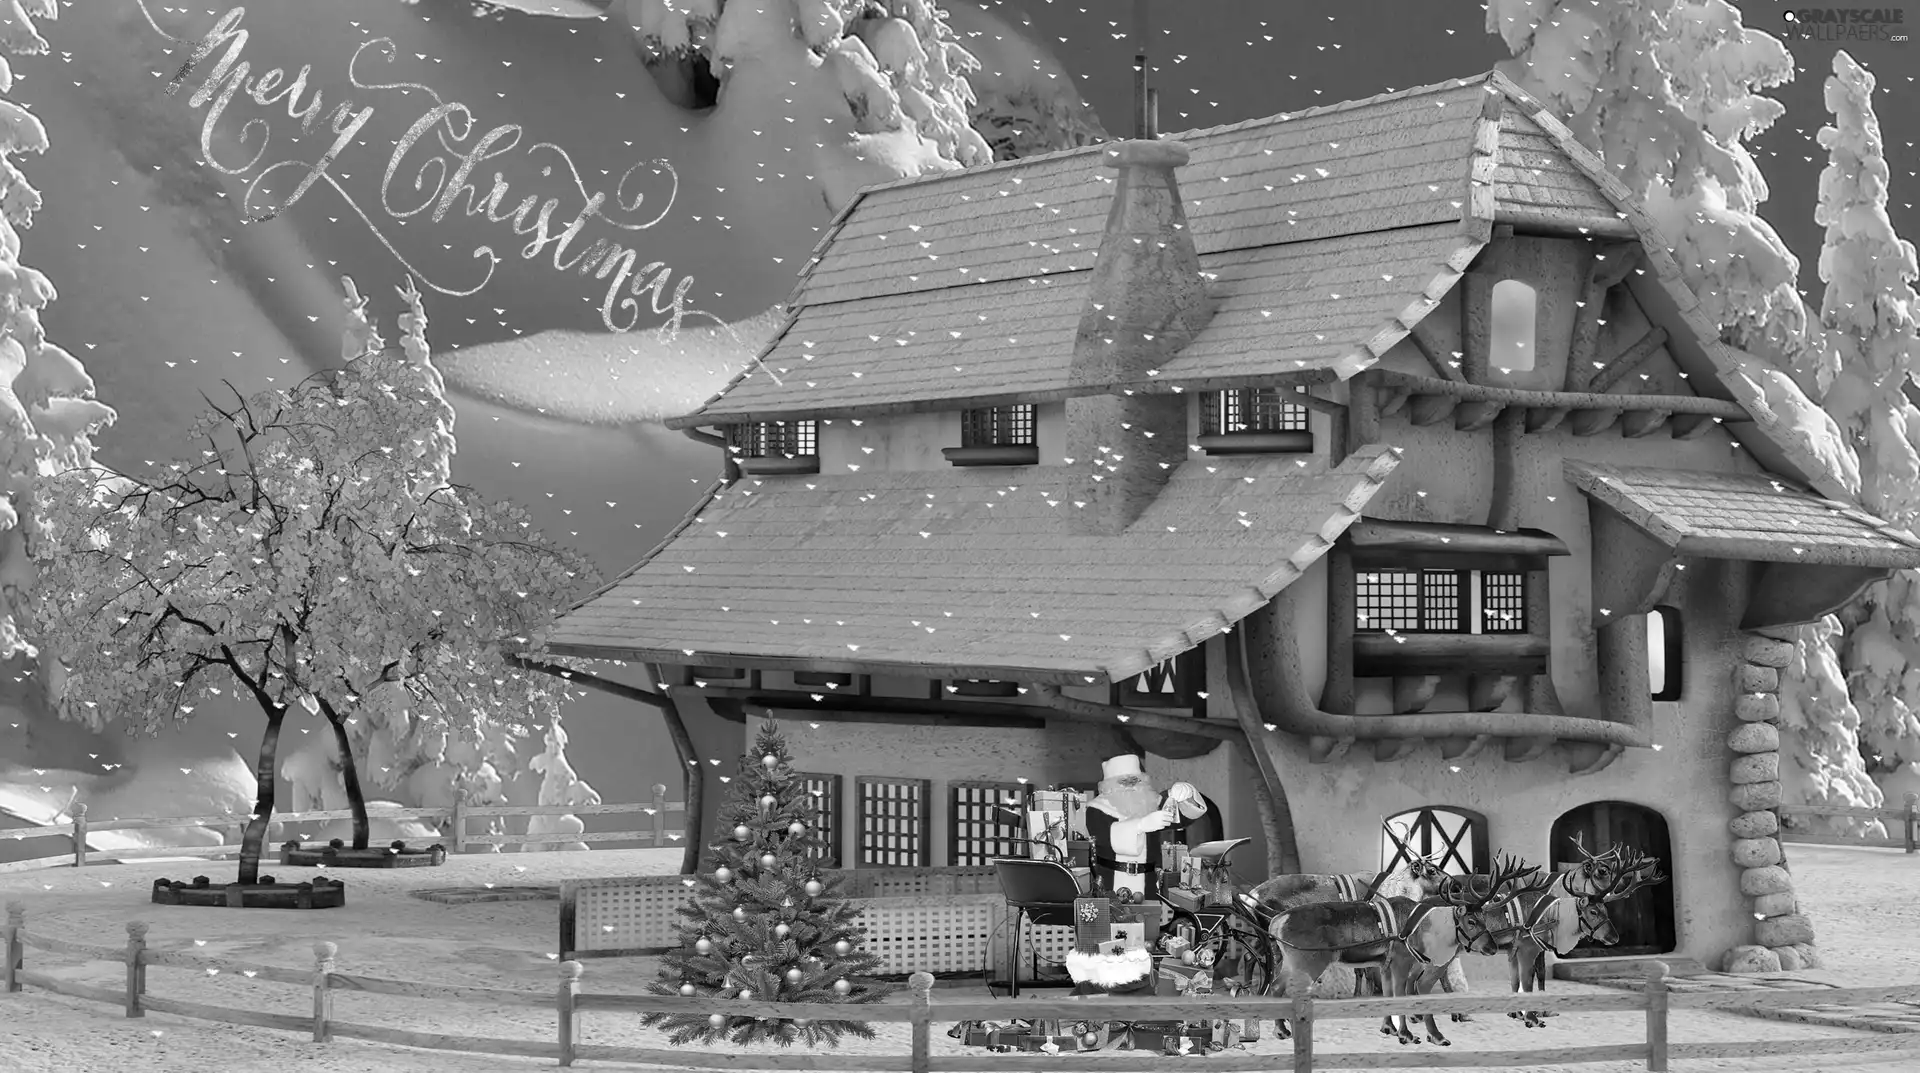 house, Christmas, Santa, christmas tree, fence, graphics, ##, snow, winter, text, team